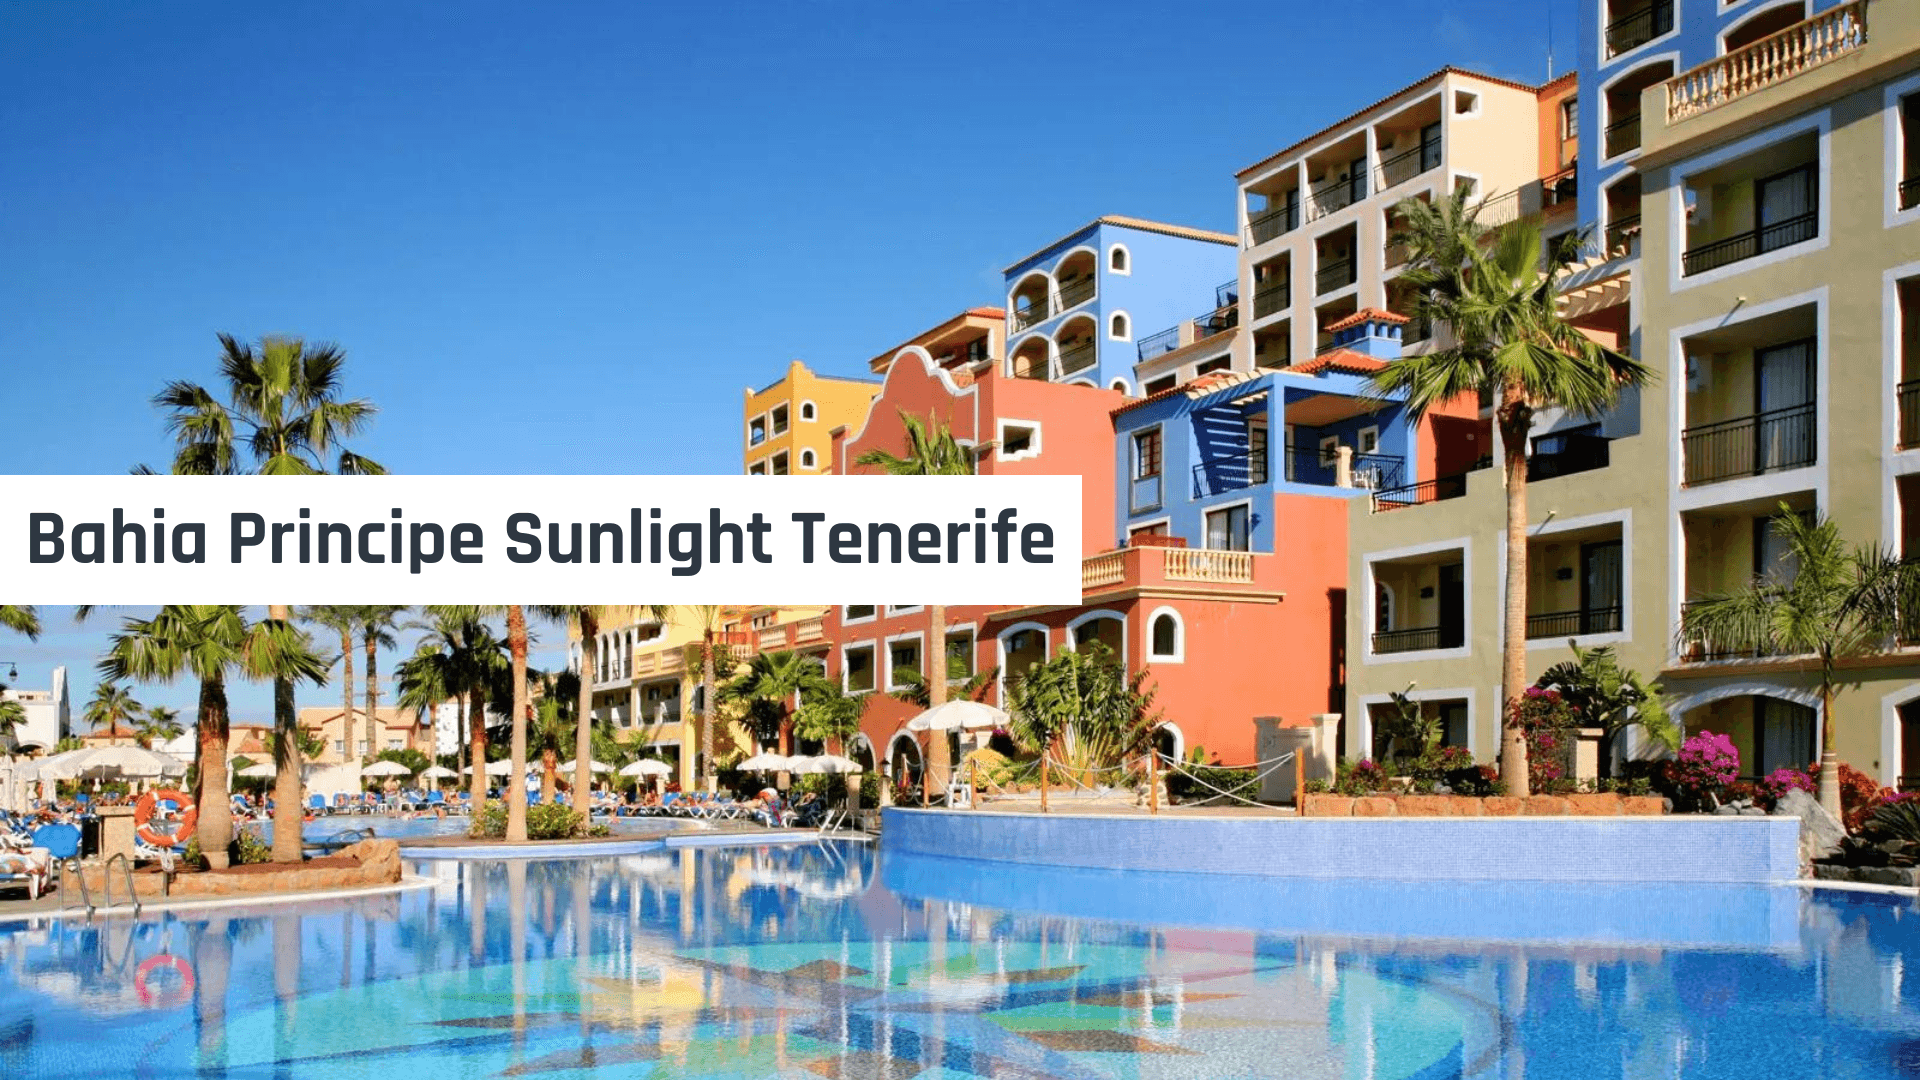 Bahia Principe Sunlight Tenerife